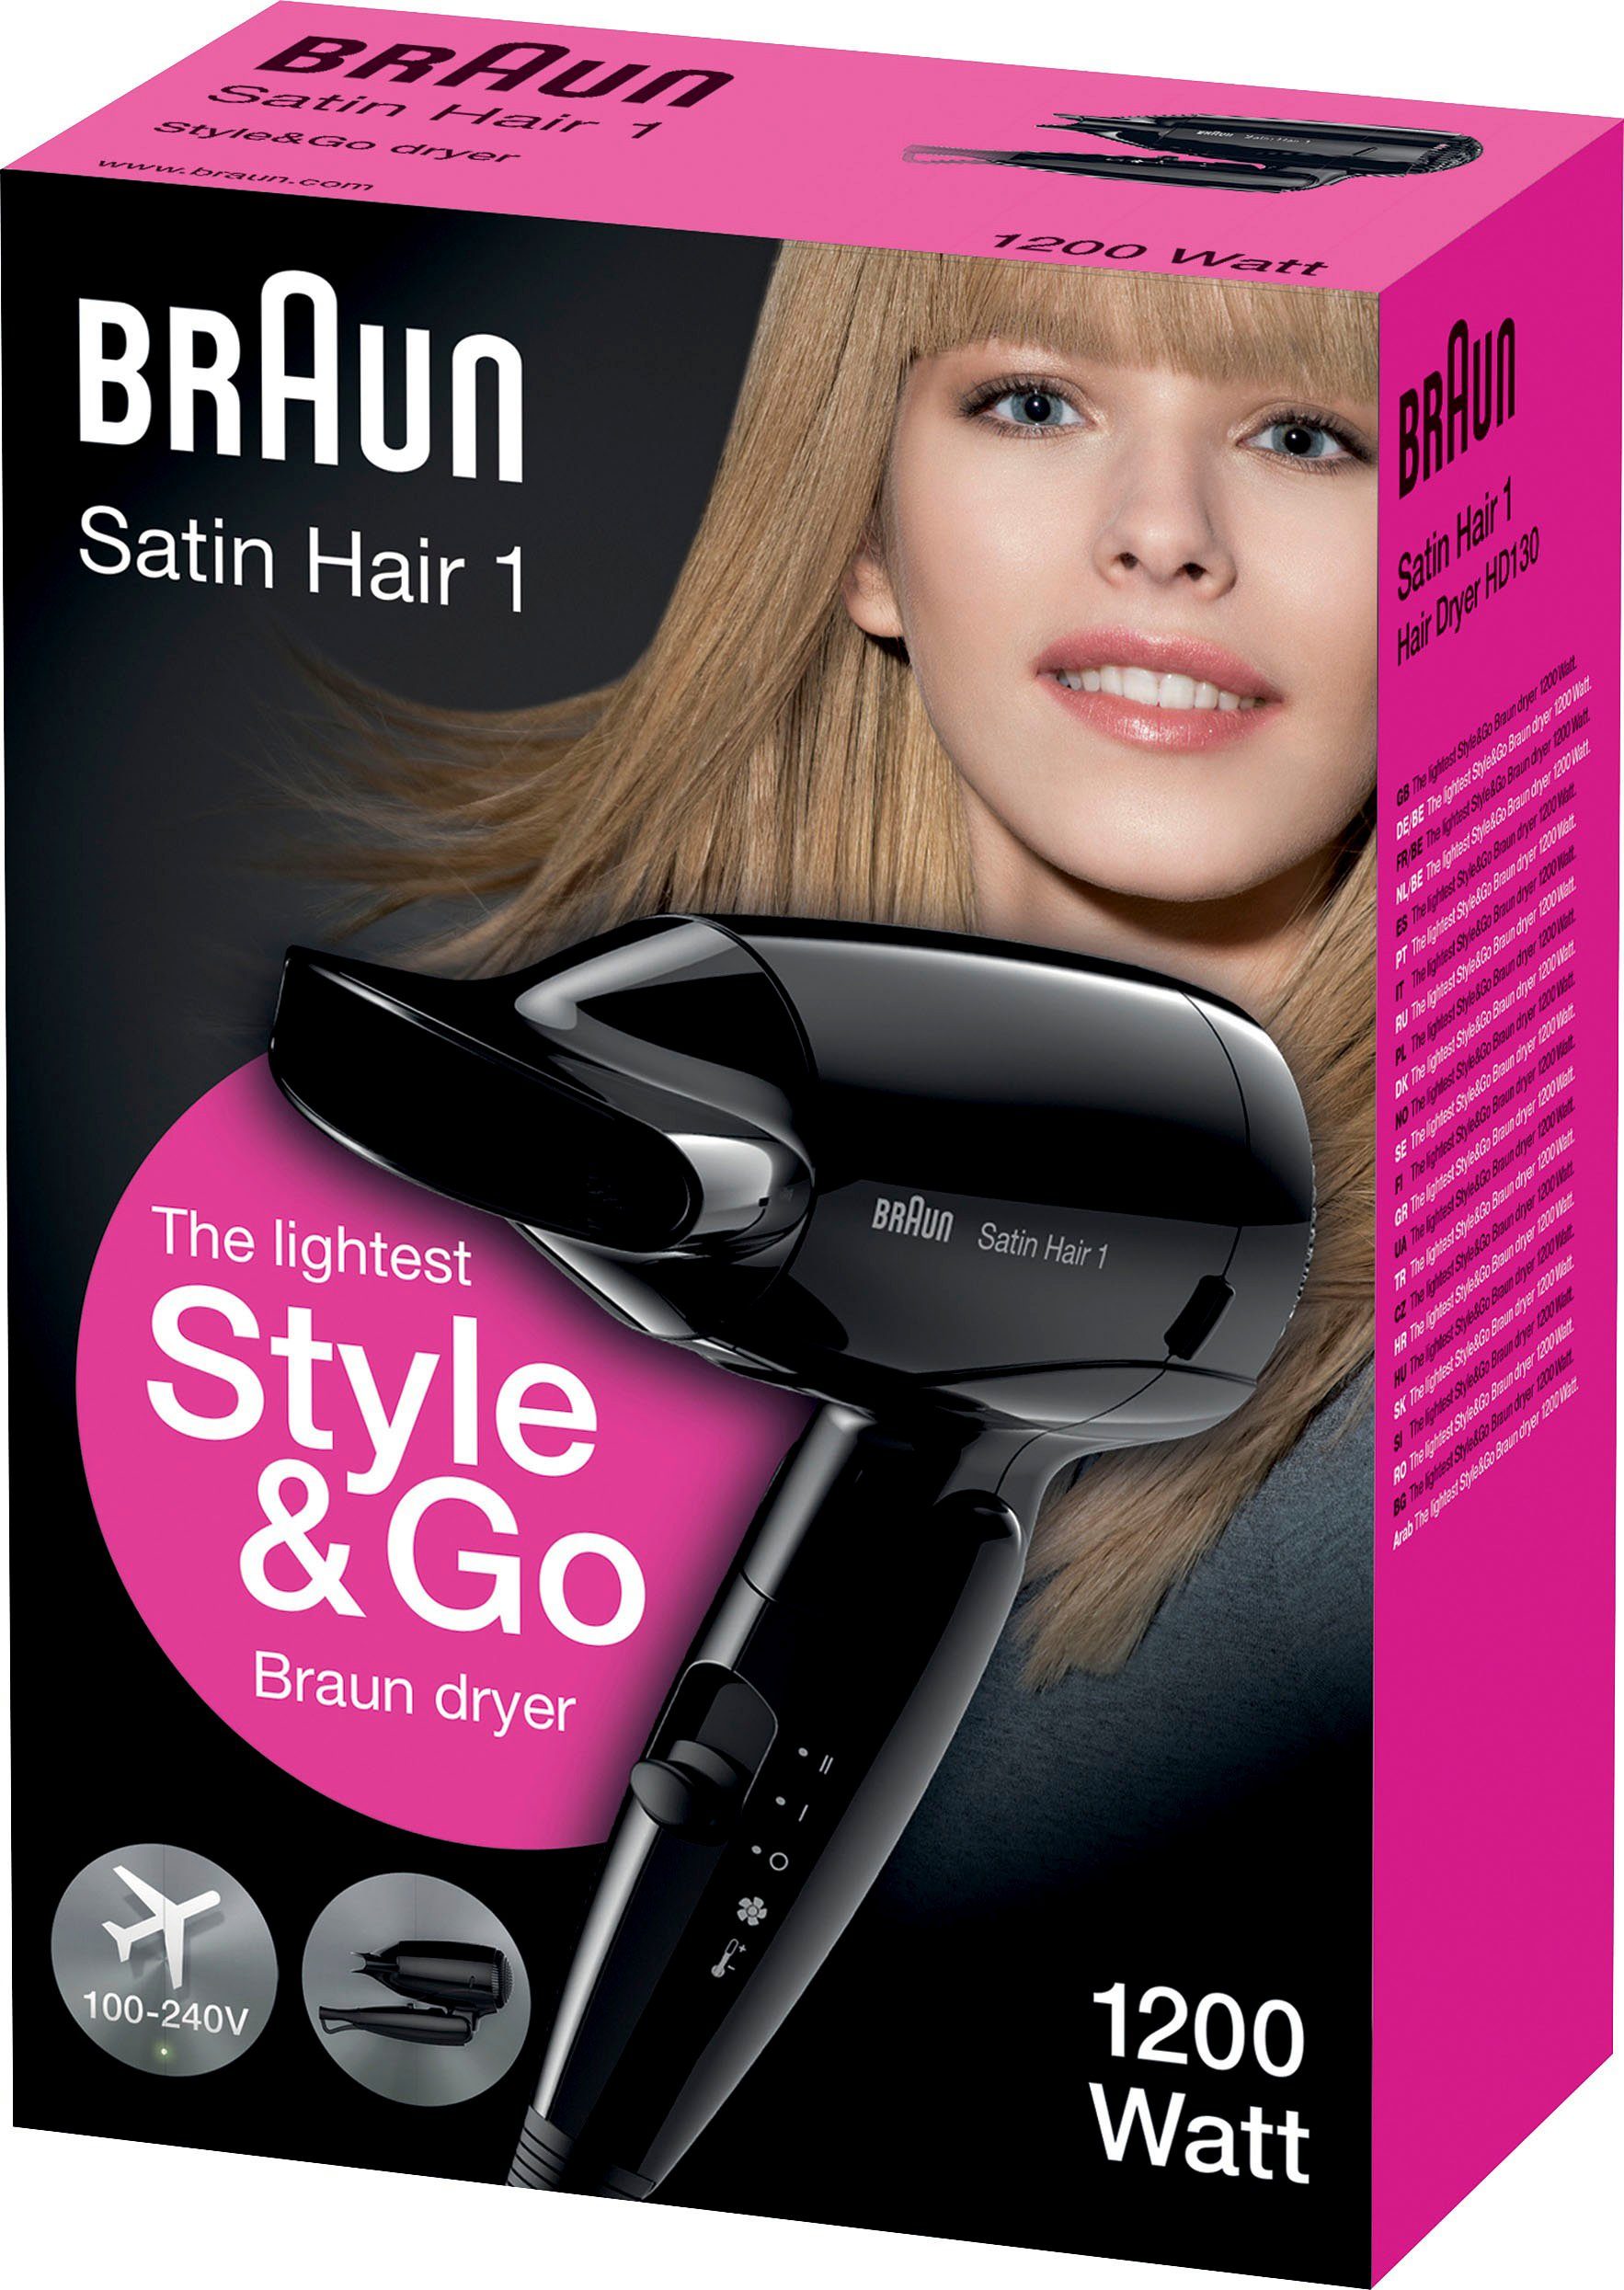 Hair Style W, Satin Go, Braun Faltbar 1 & Braun Reisehaartrockner 1200